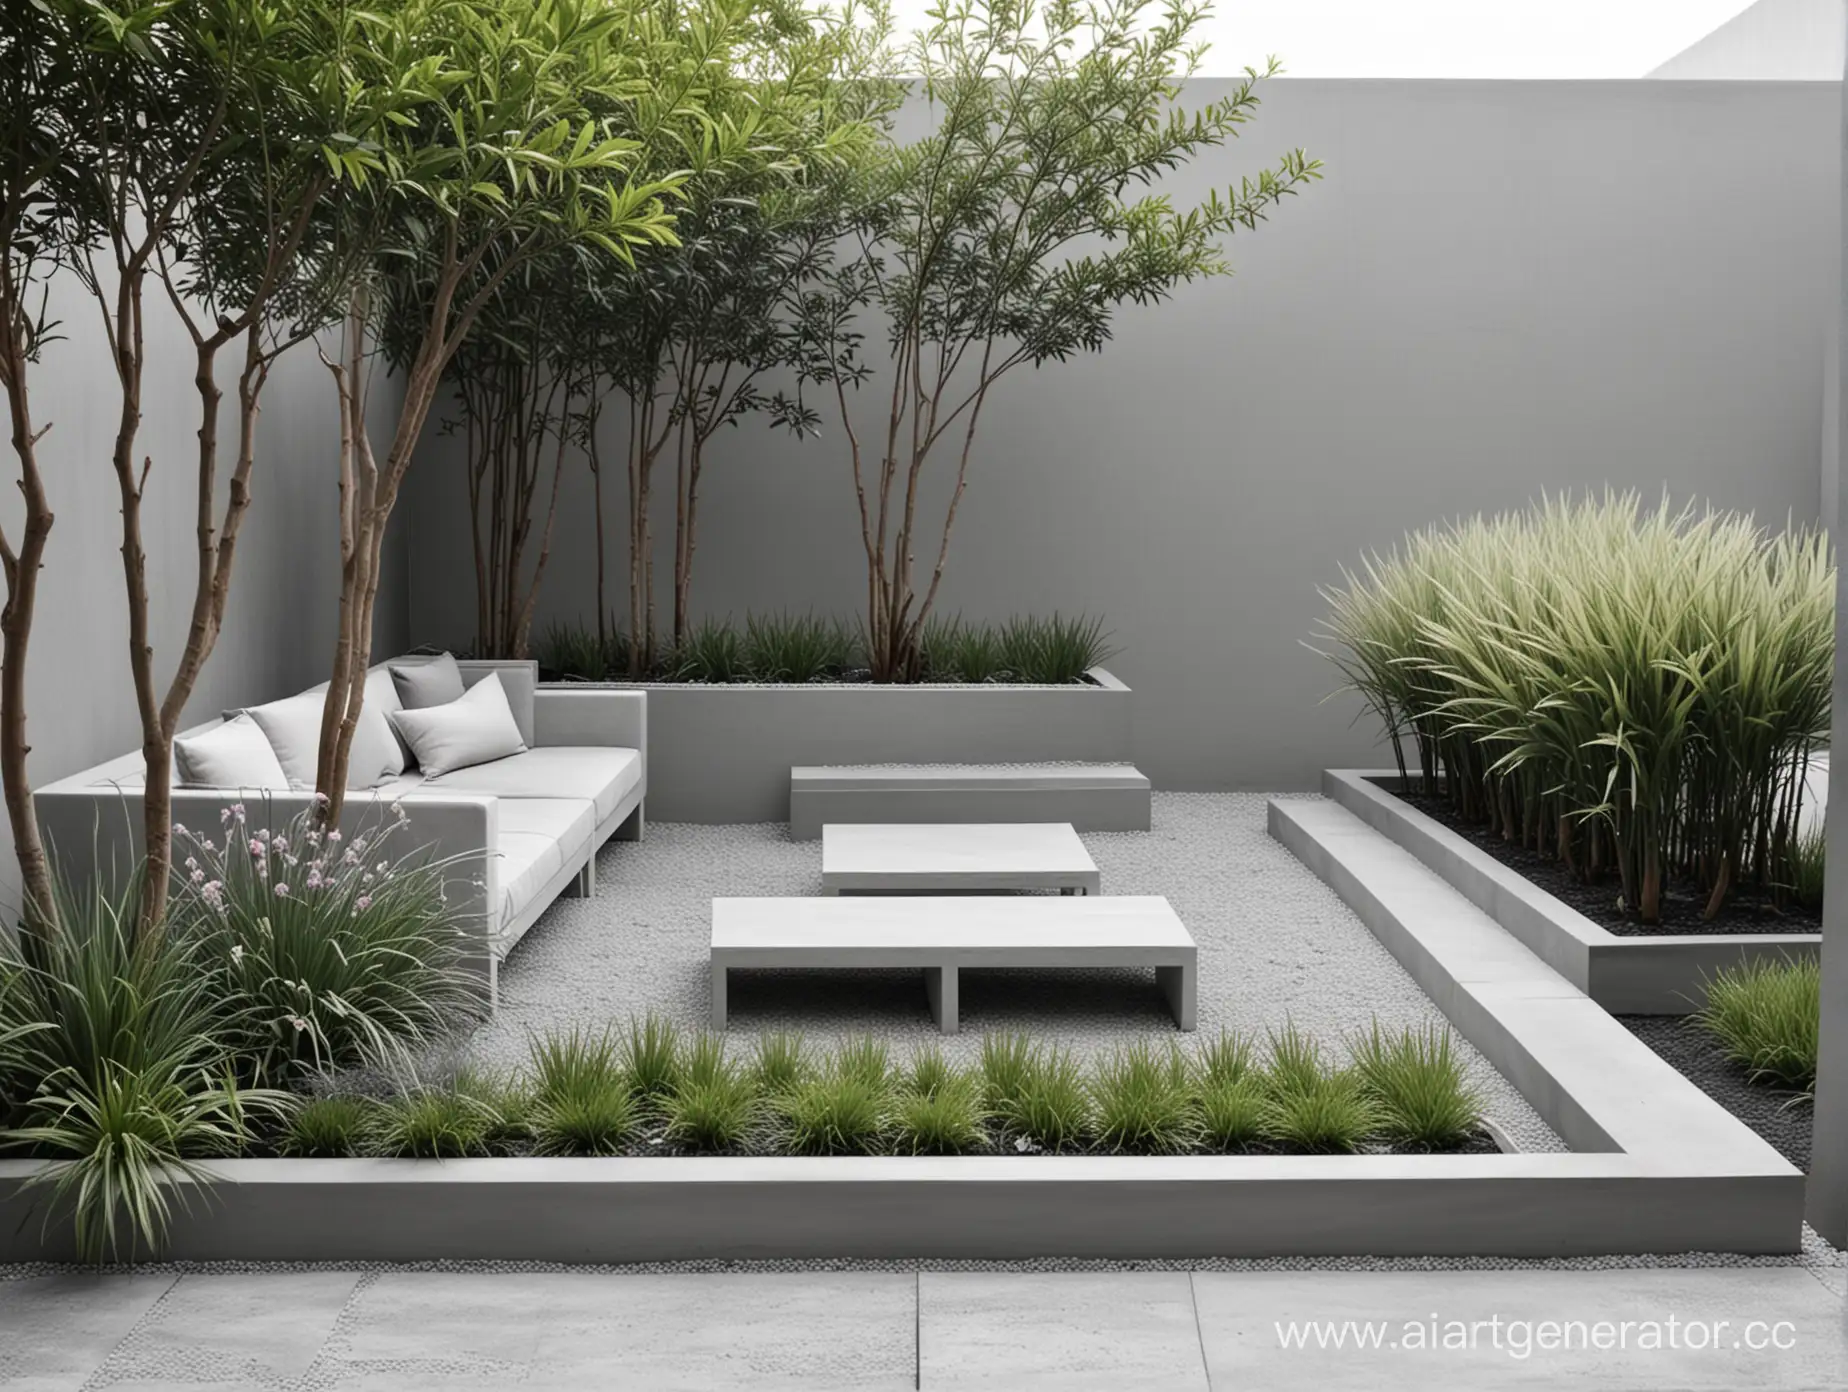 Minimalist-Interior-Design-with-Gray-Pastel-Tones-in-Garden-Setting